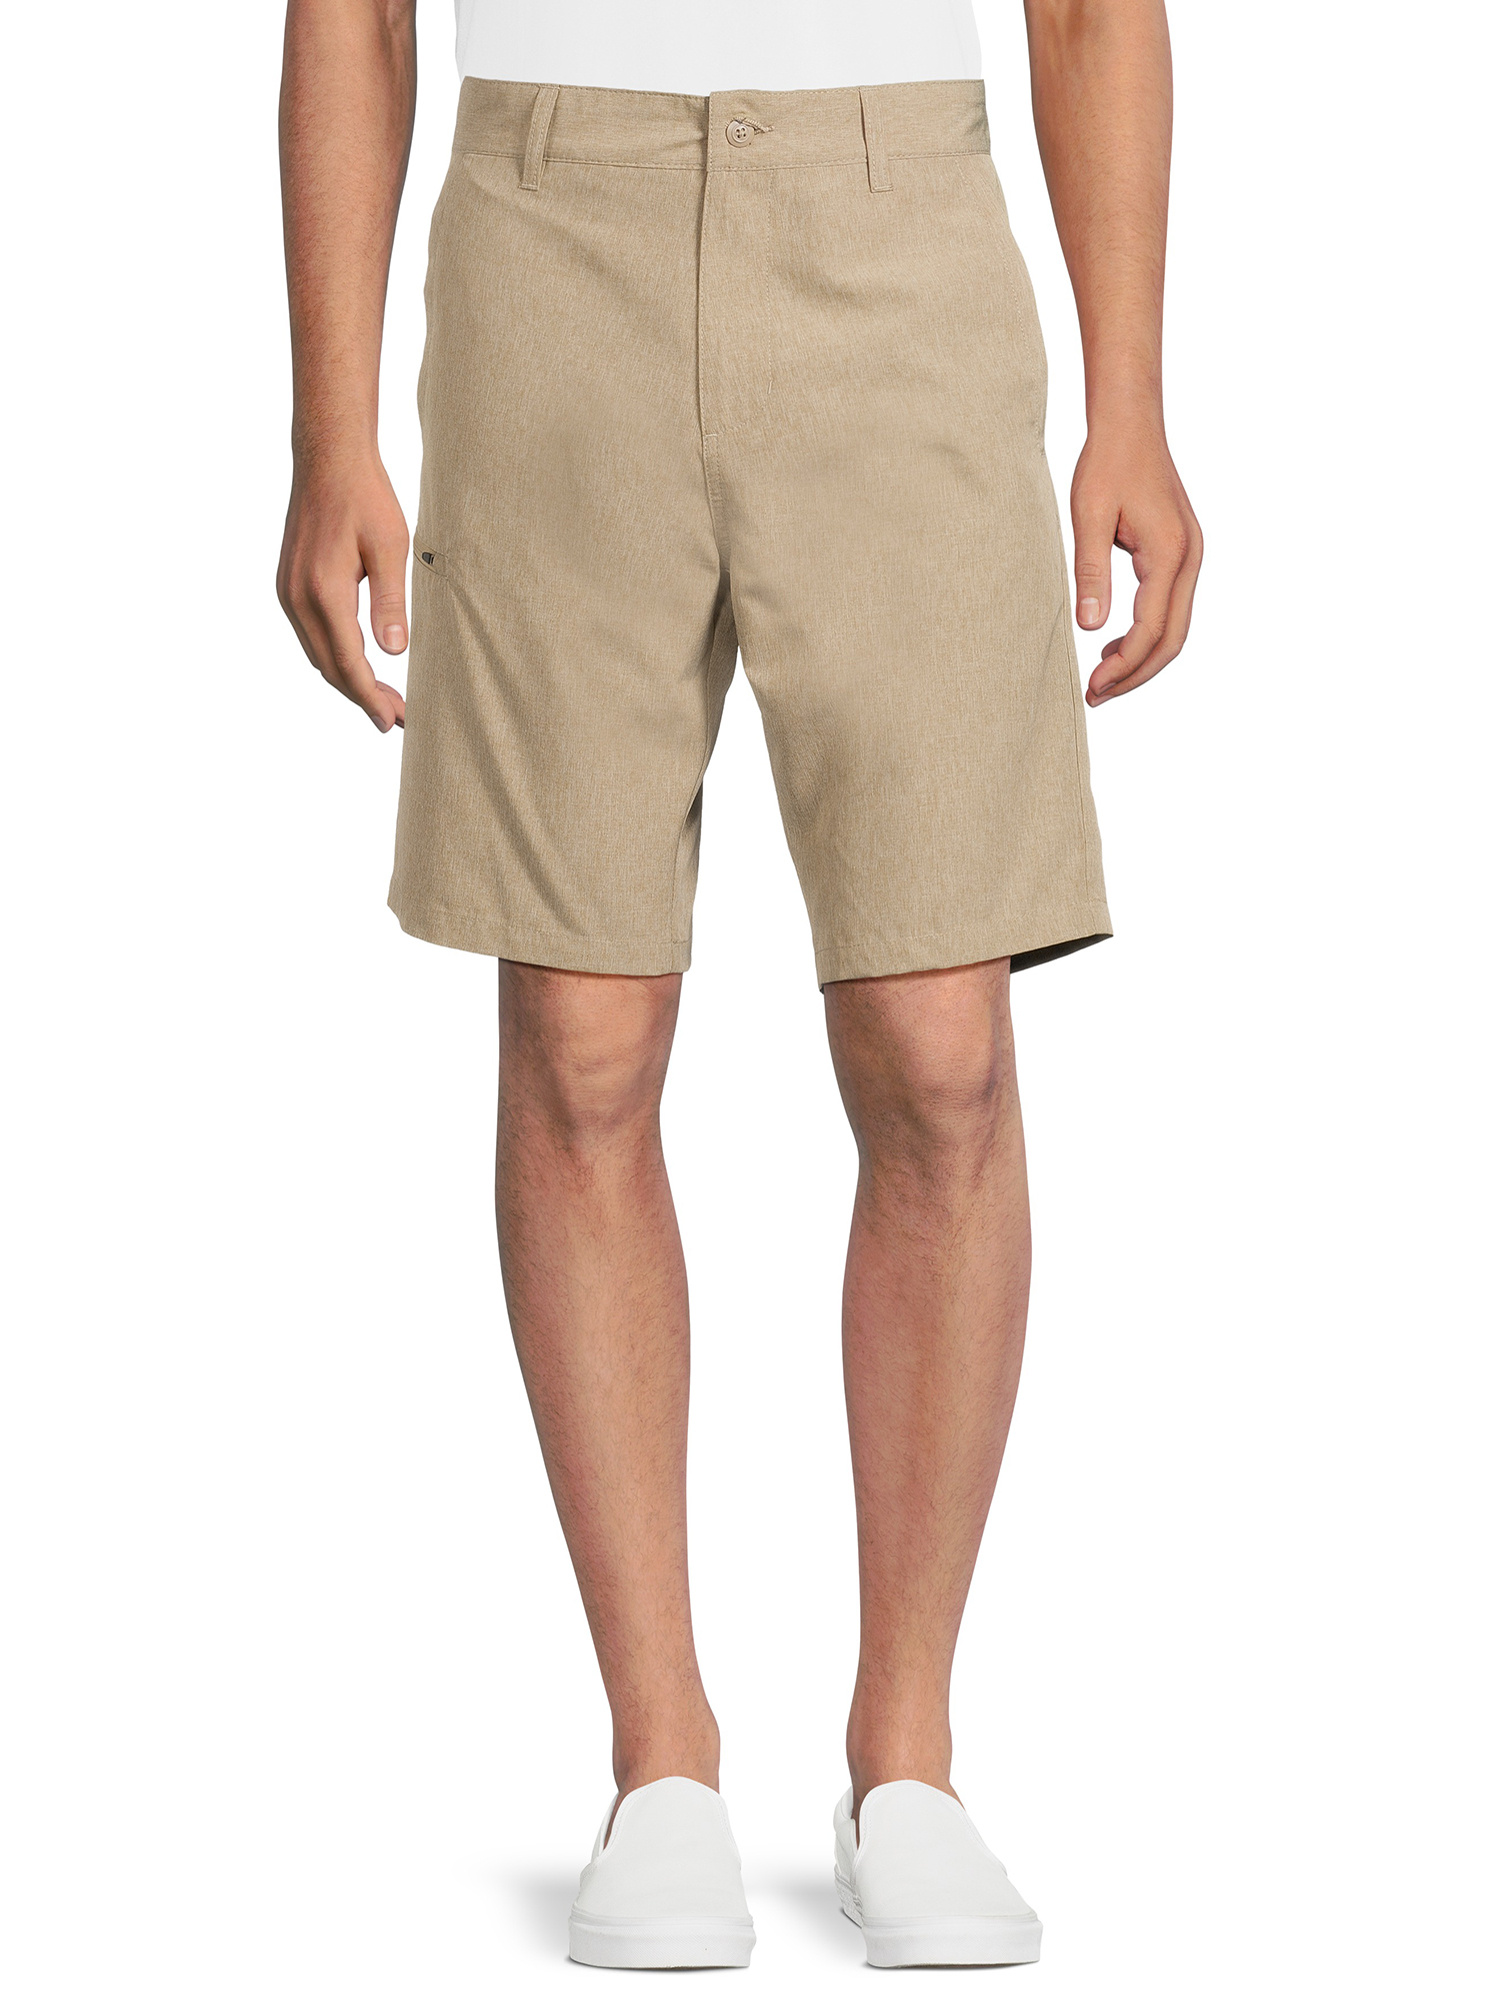 Burnside Men's Microfiber Cargo Shorts, 9" Inseam, Sizes 30-40